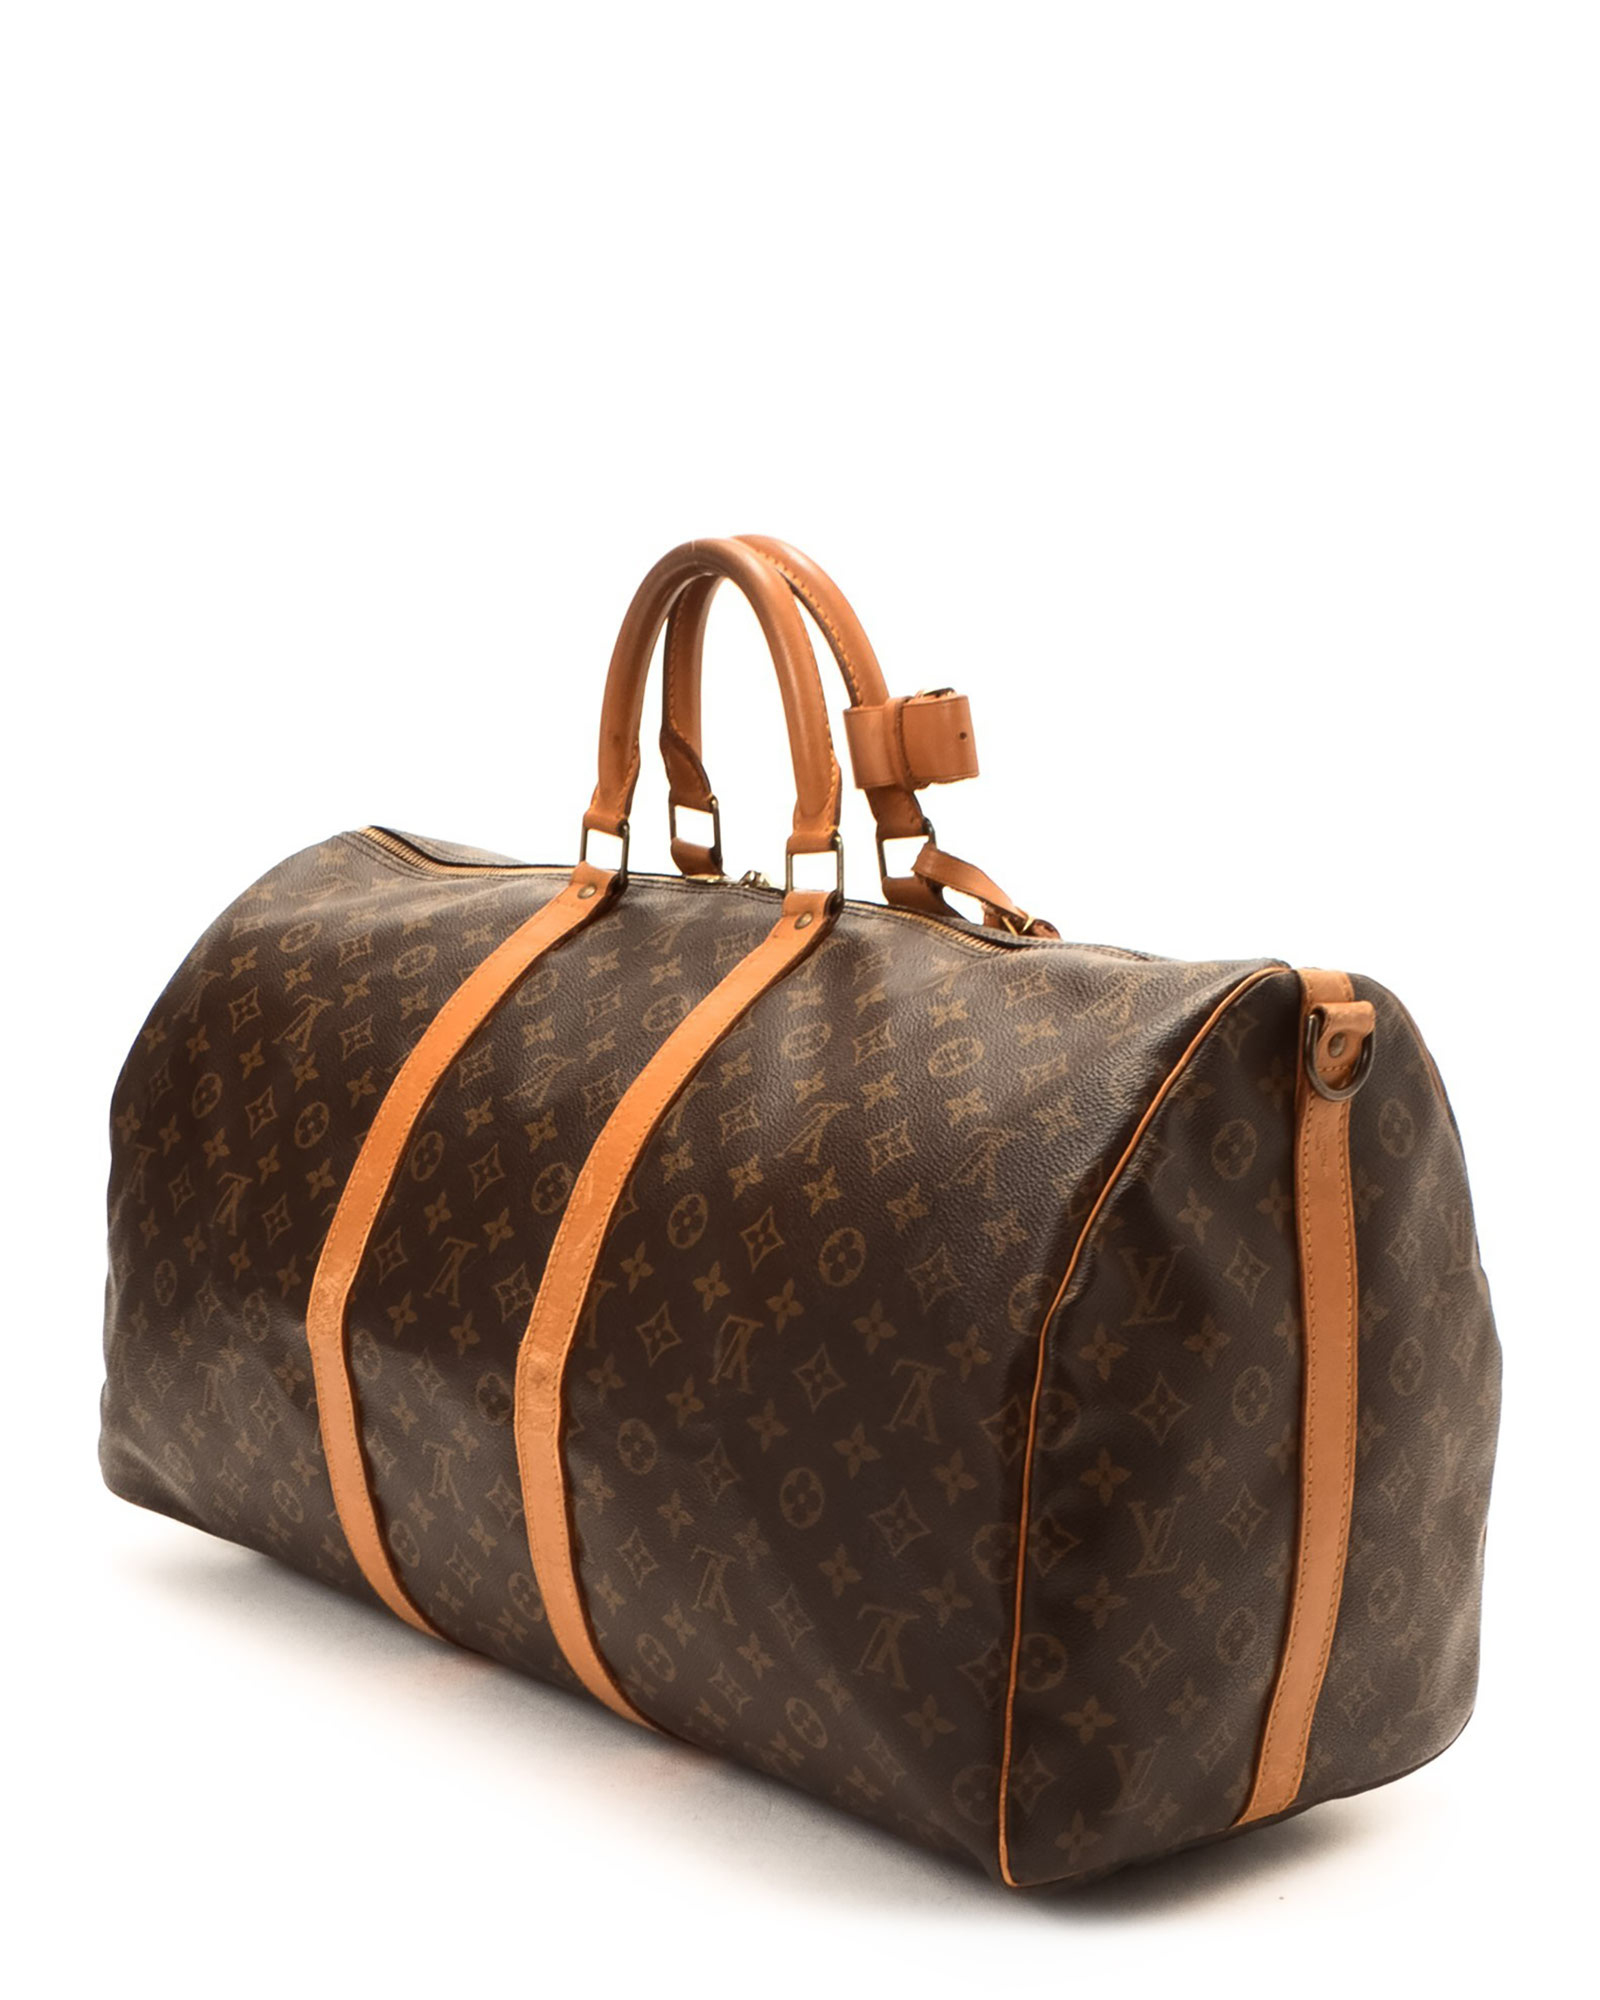 Best Louis Vuitton Handbag For Travel | CINEMAS 93